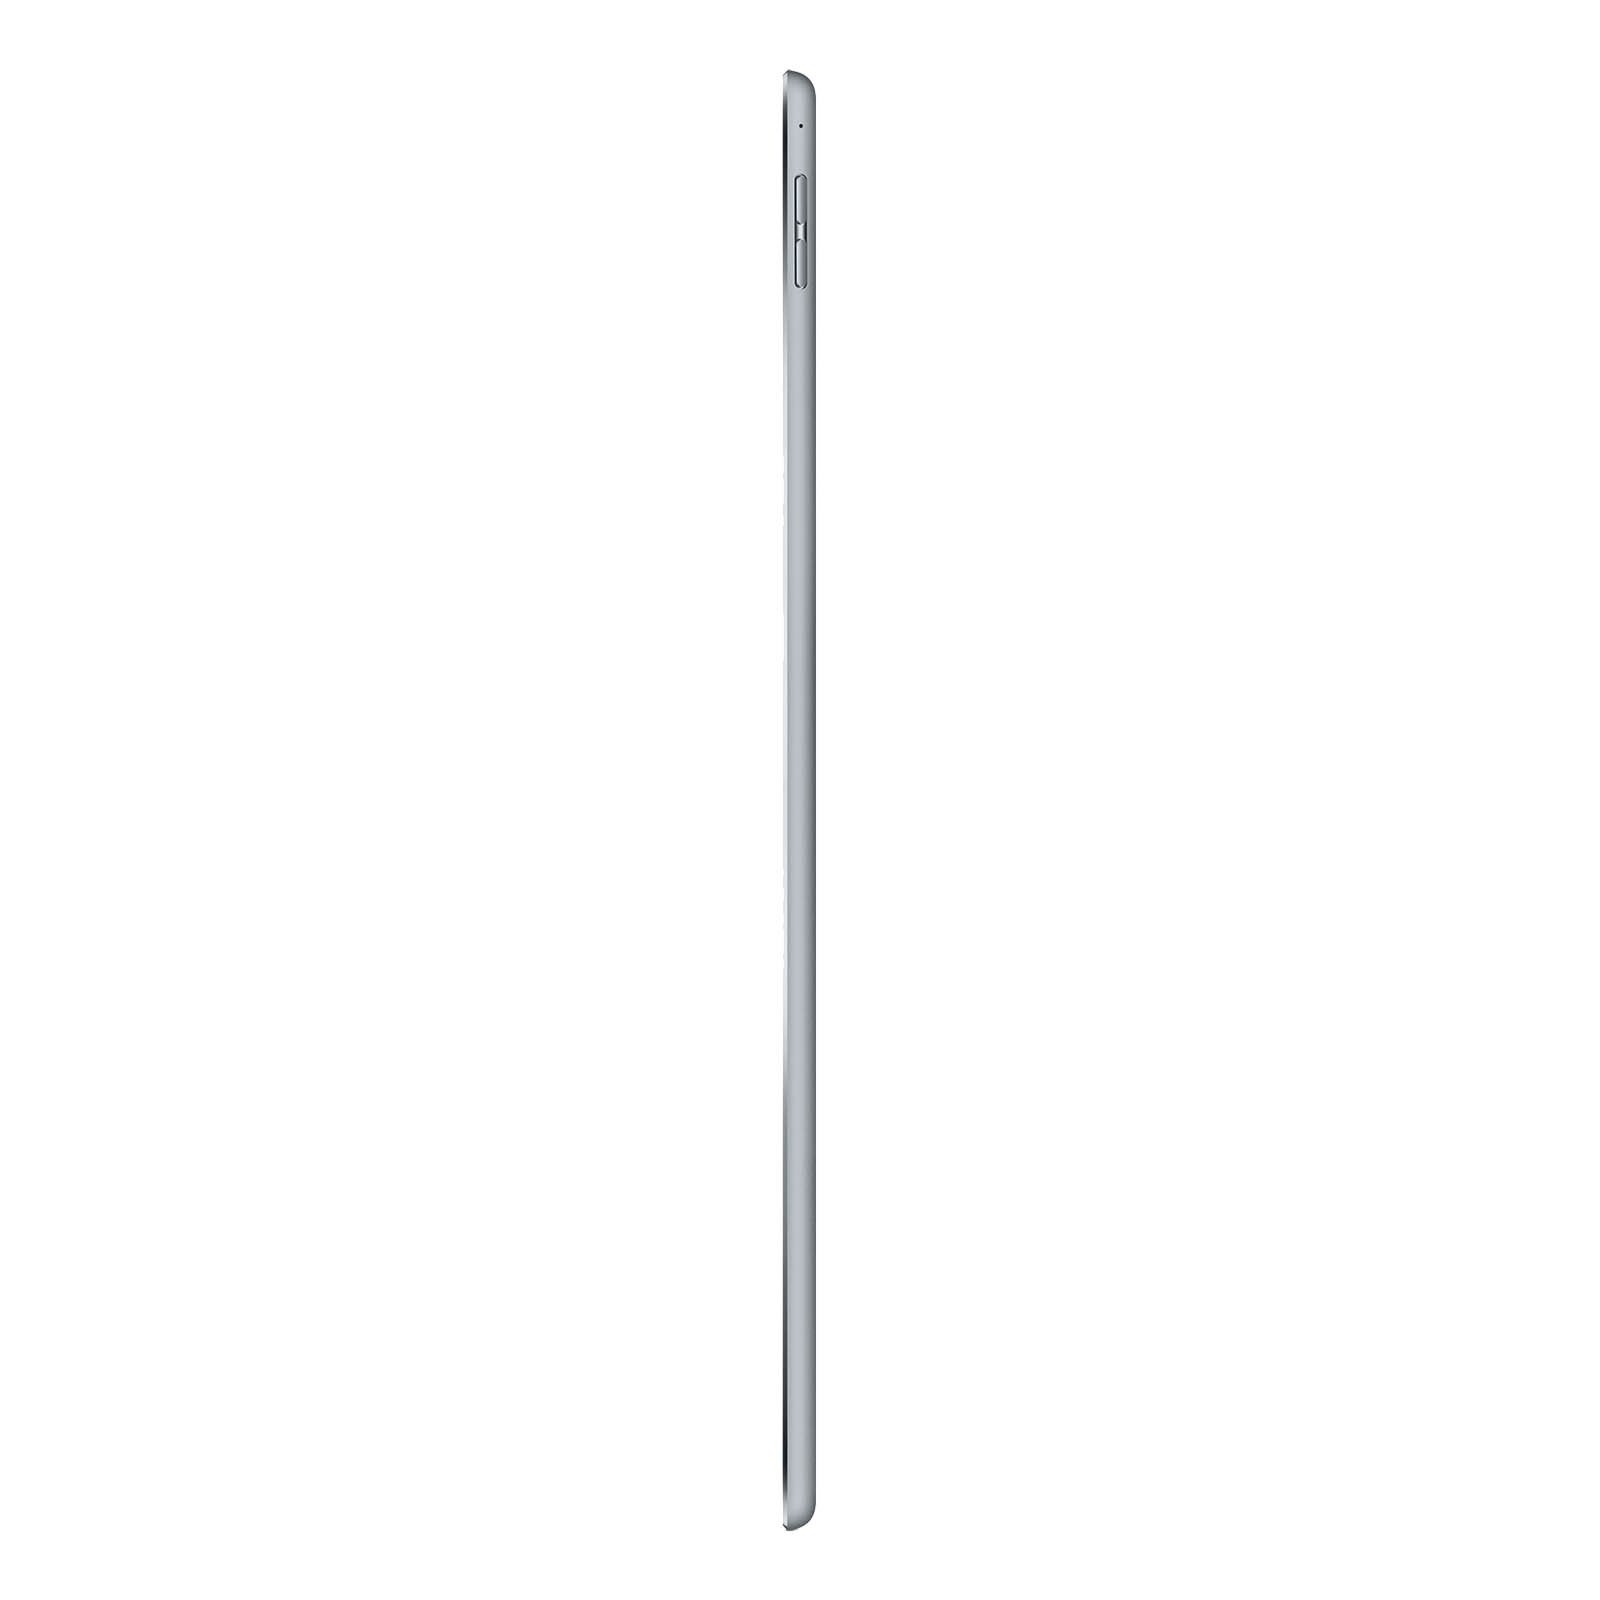 iPad Pro 12.9 Inch 3rd Gen 64GB Space Grey Pristine - Unlocked